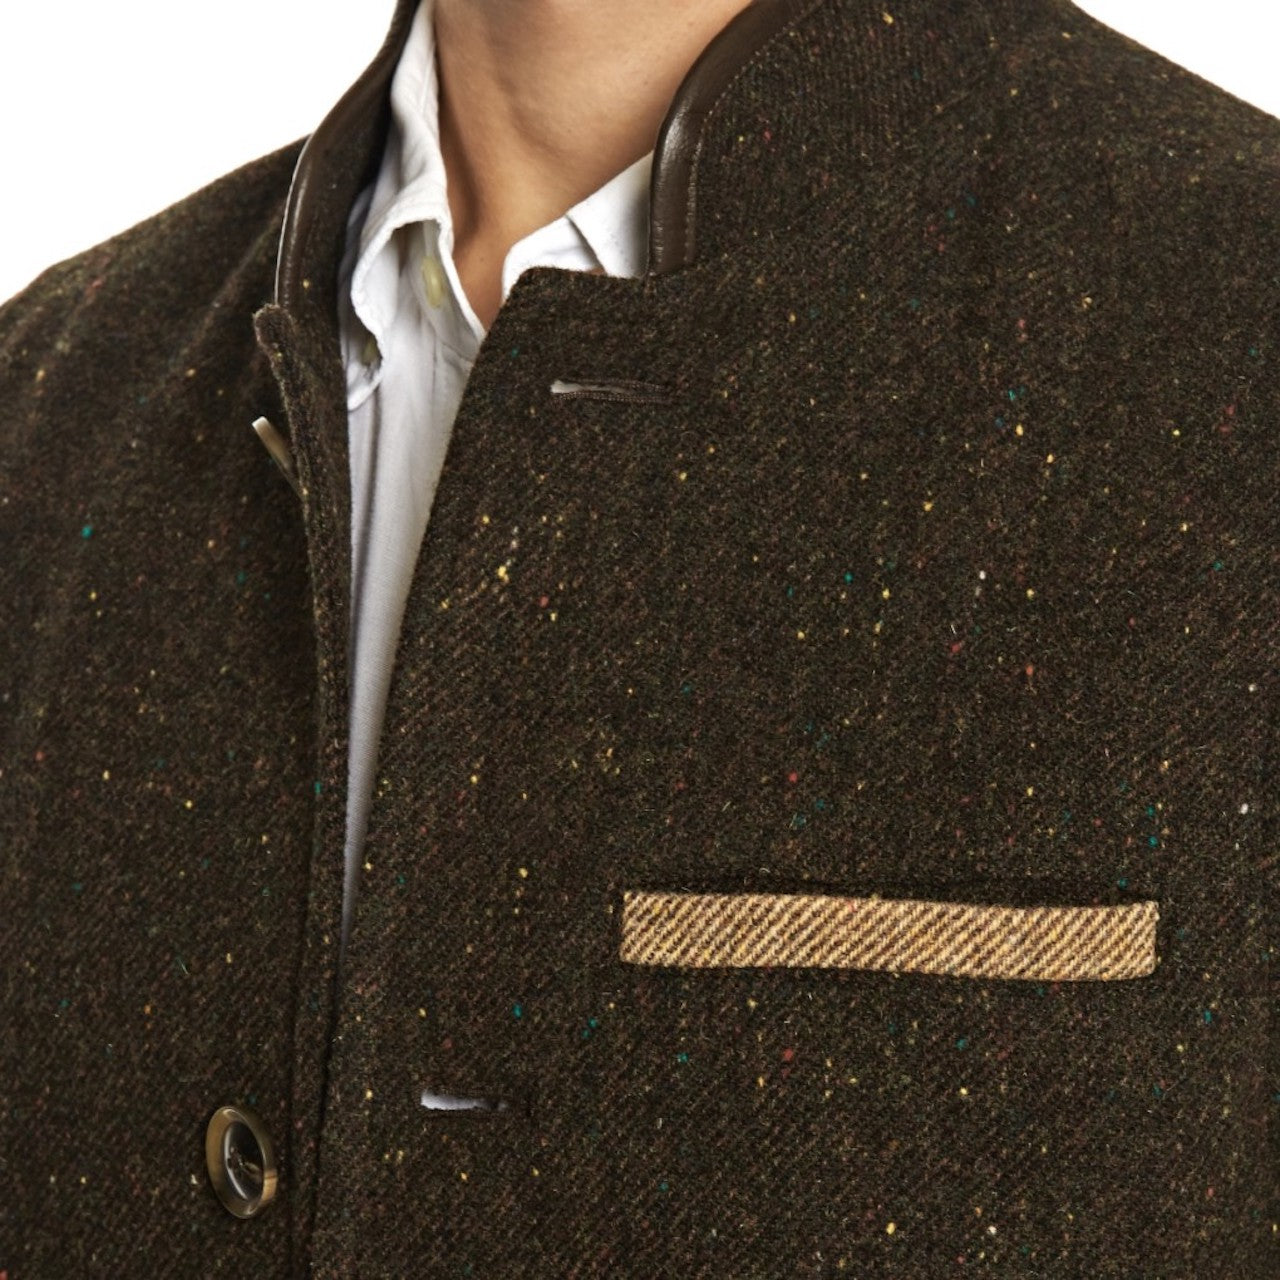 Men's Darzi Tweed Wool gilet in dark brown - close up view